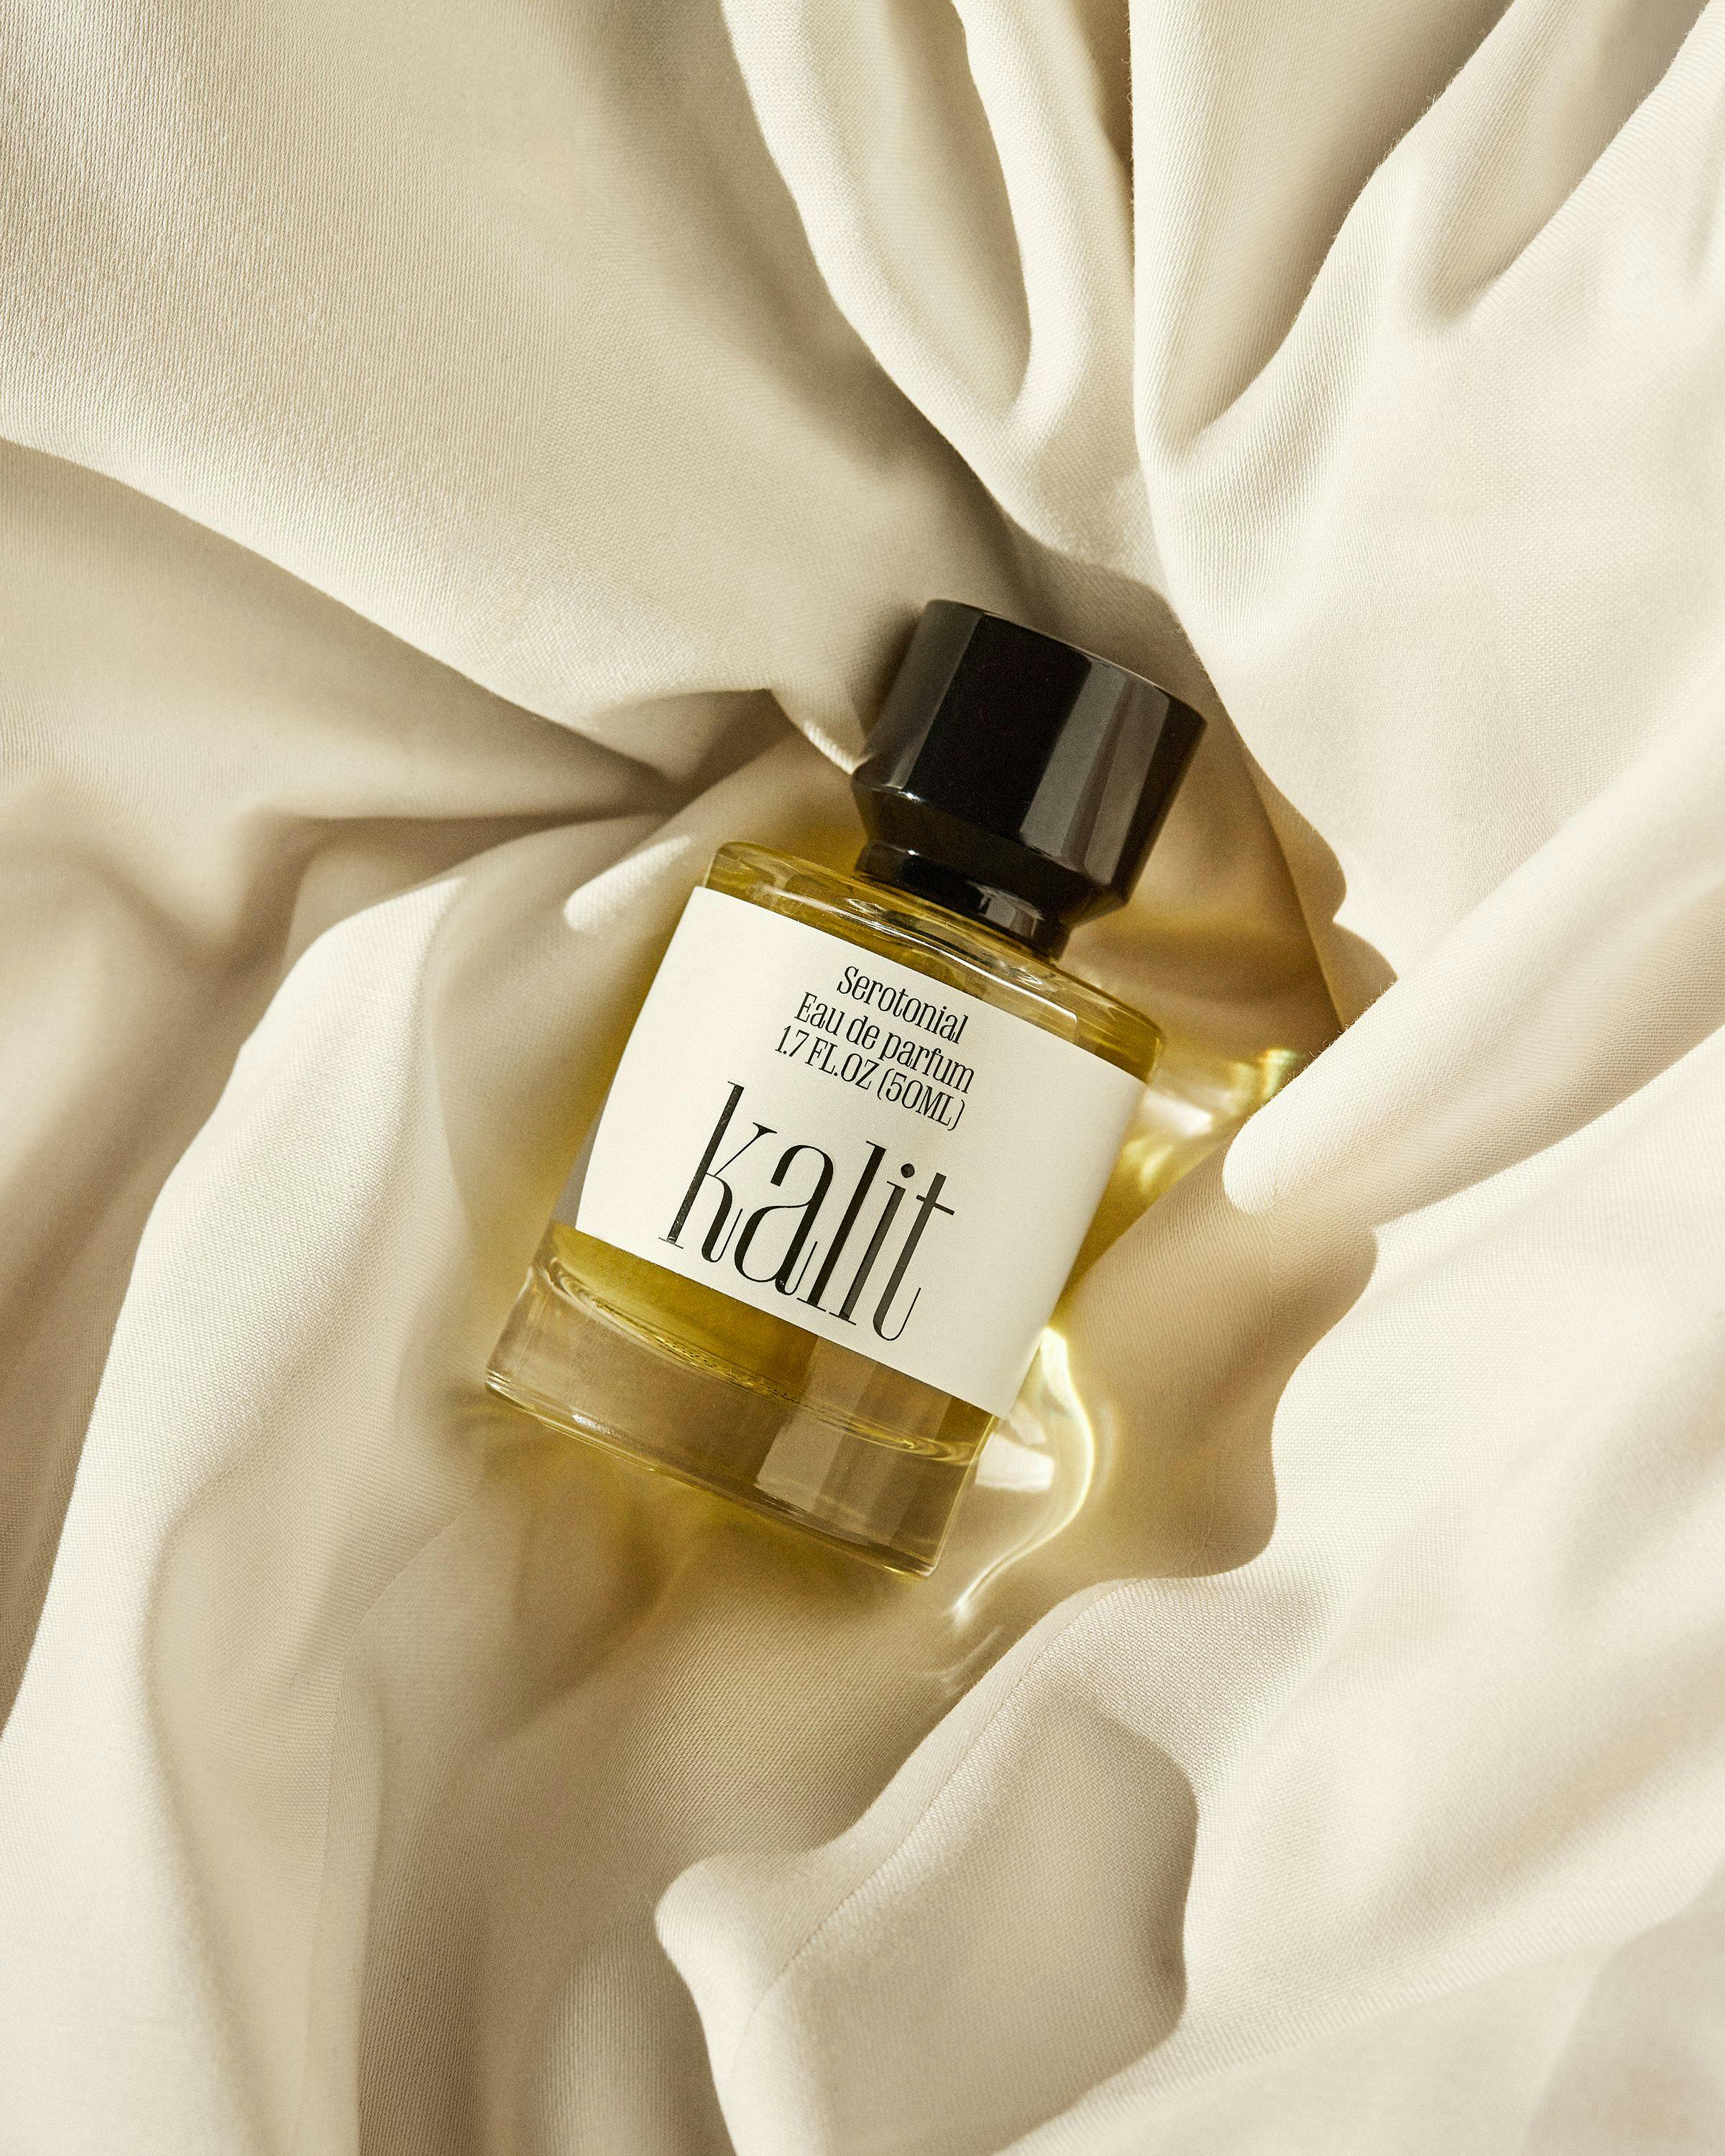 Bottle of perfume by Kalit, Serotonial fragrance